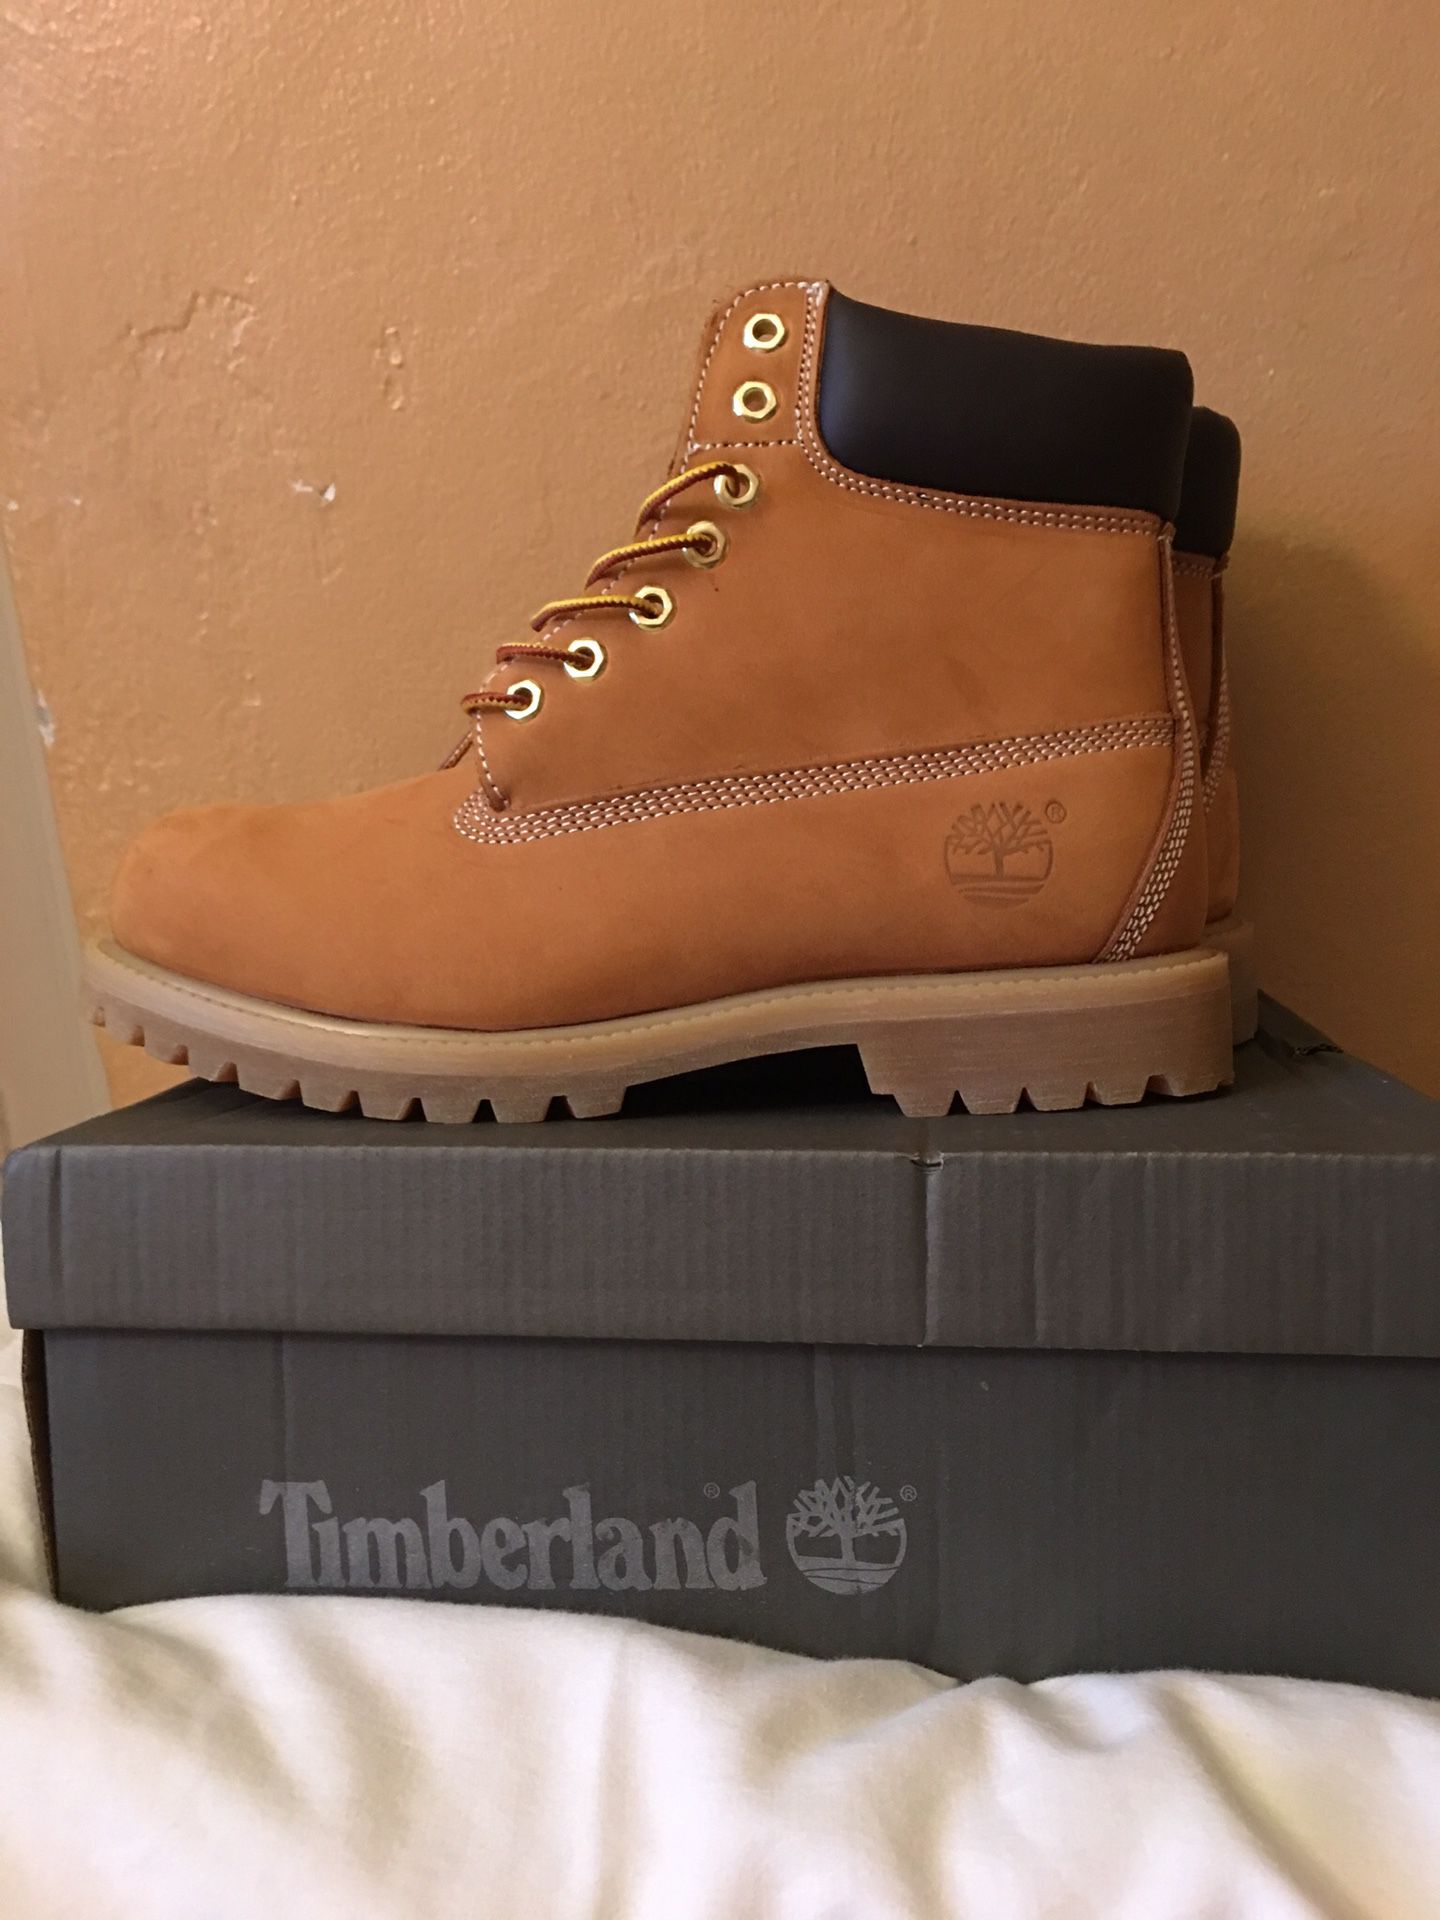 Timberland classic wheat boots